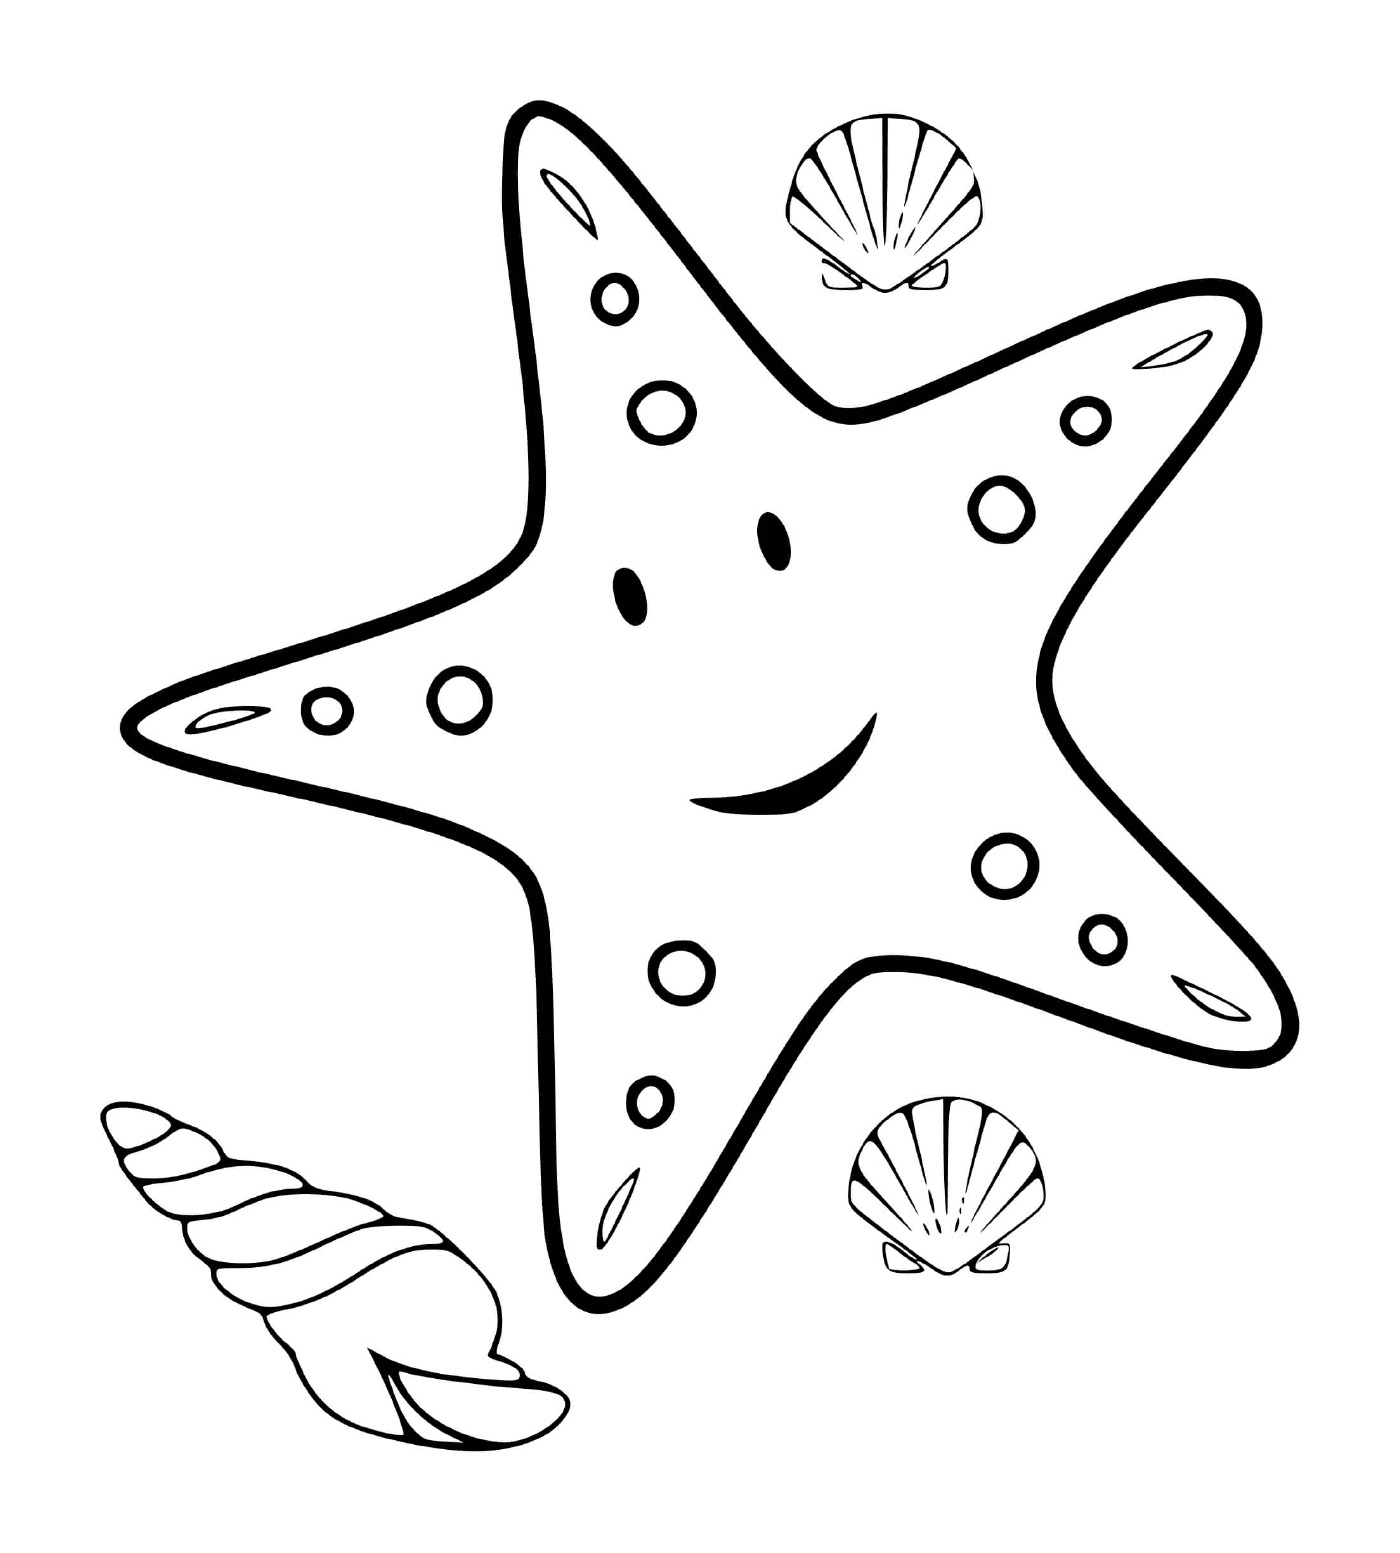  a star of sea and shellfish 